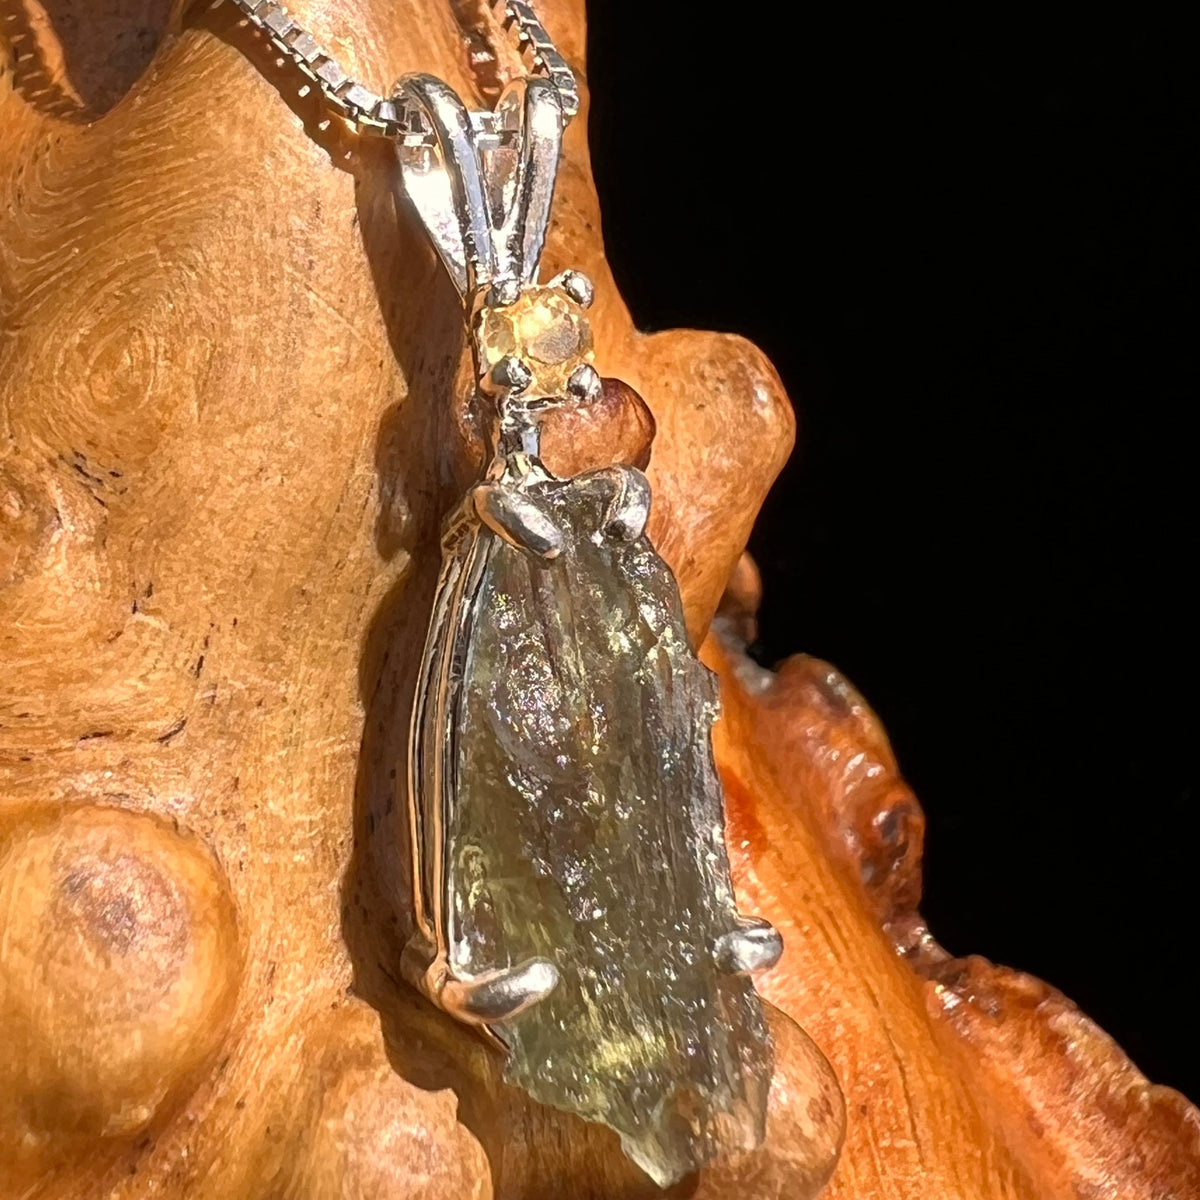 Moldavite & Citrine Necklace Sterling Silver #5514-Moldavite Life